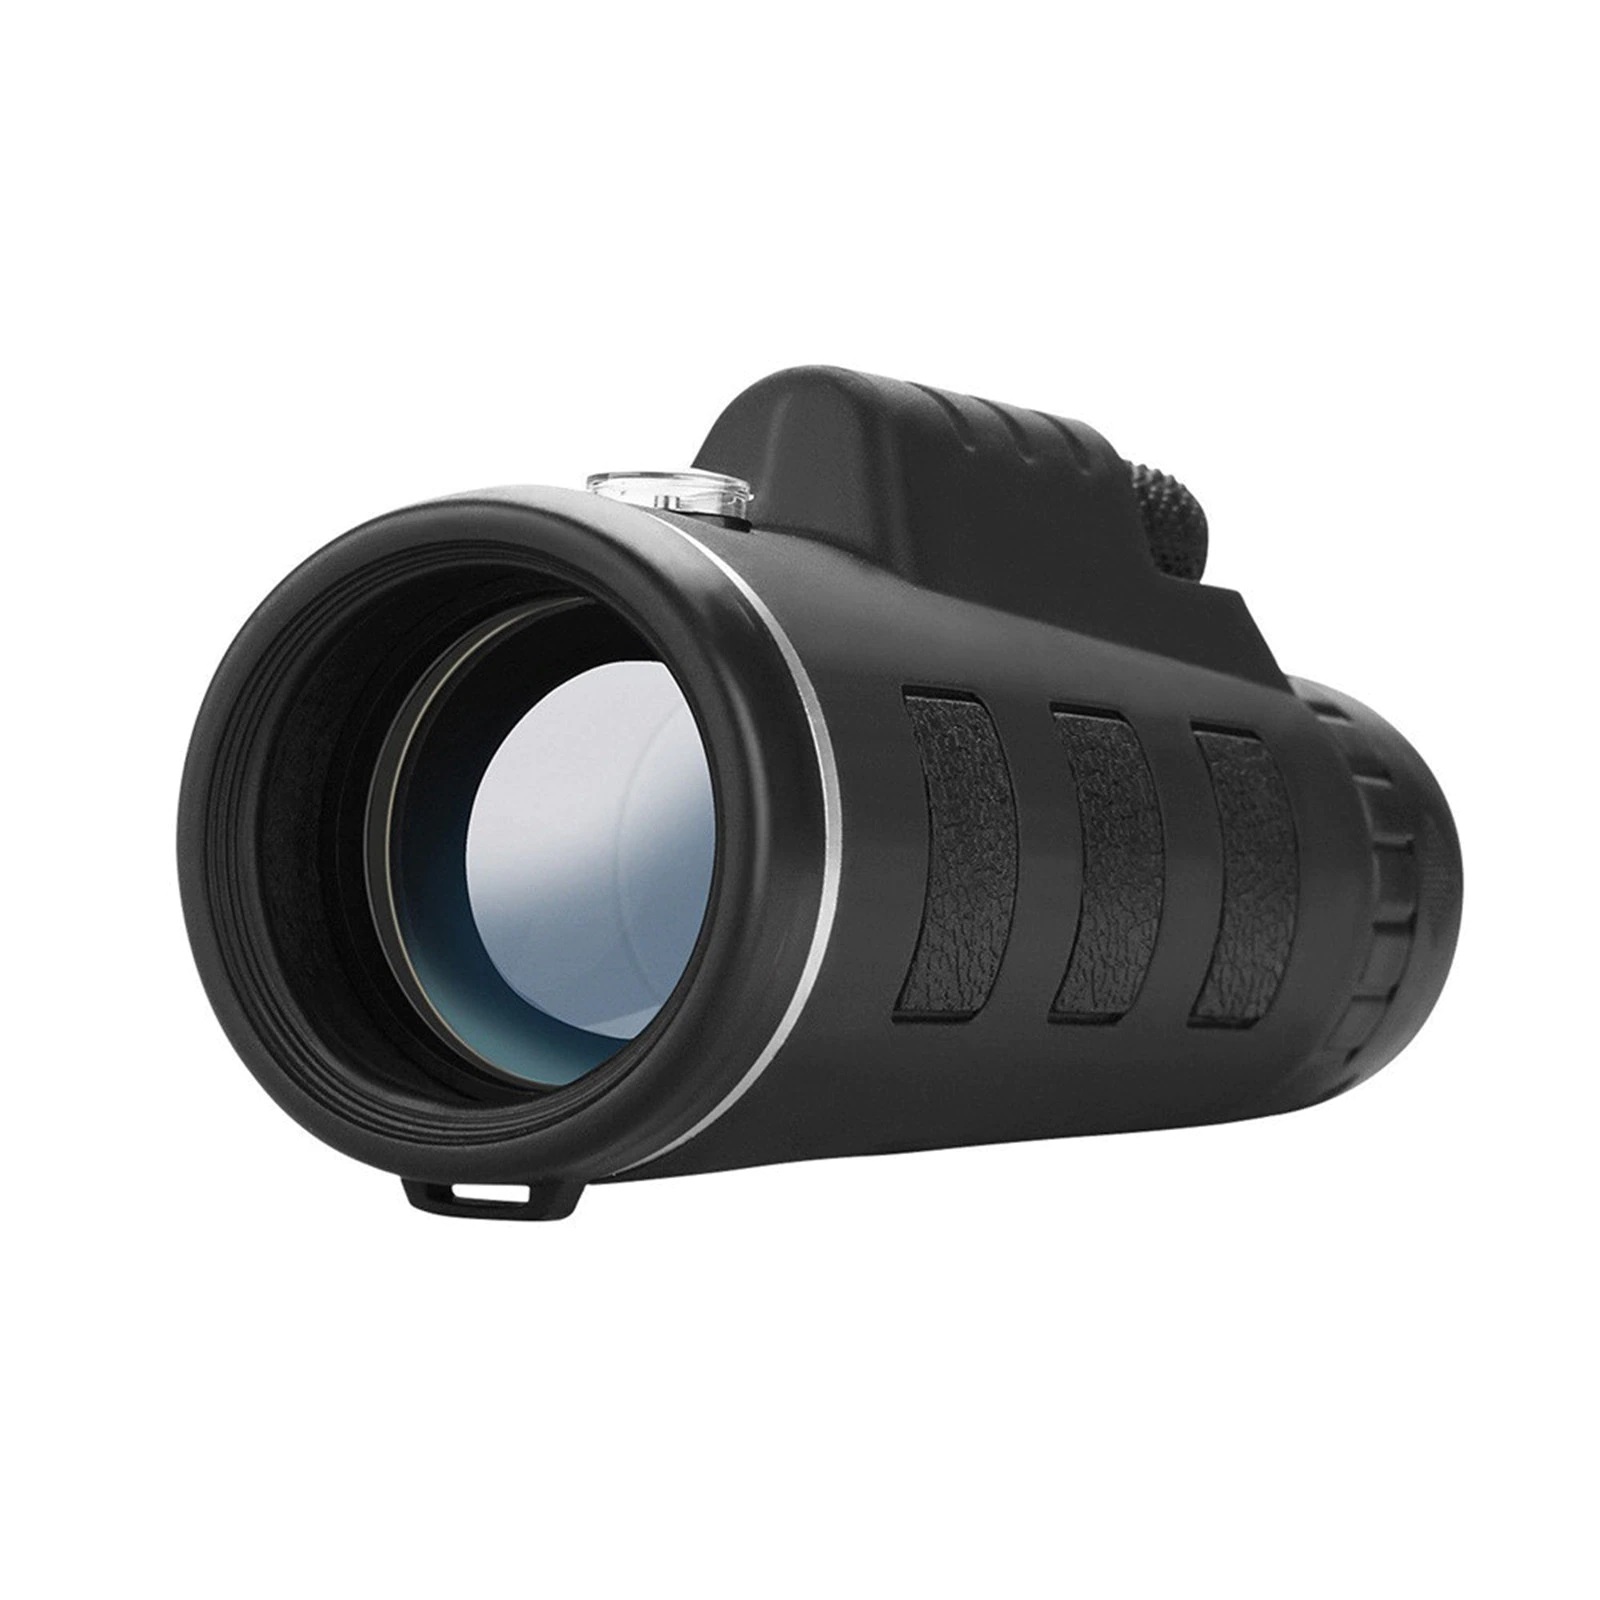 دوربین تک چشمی بوشنل مدل 12X52